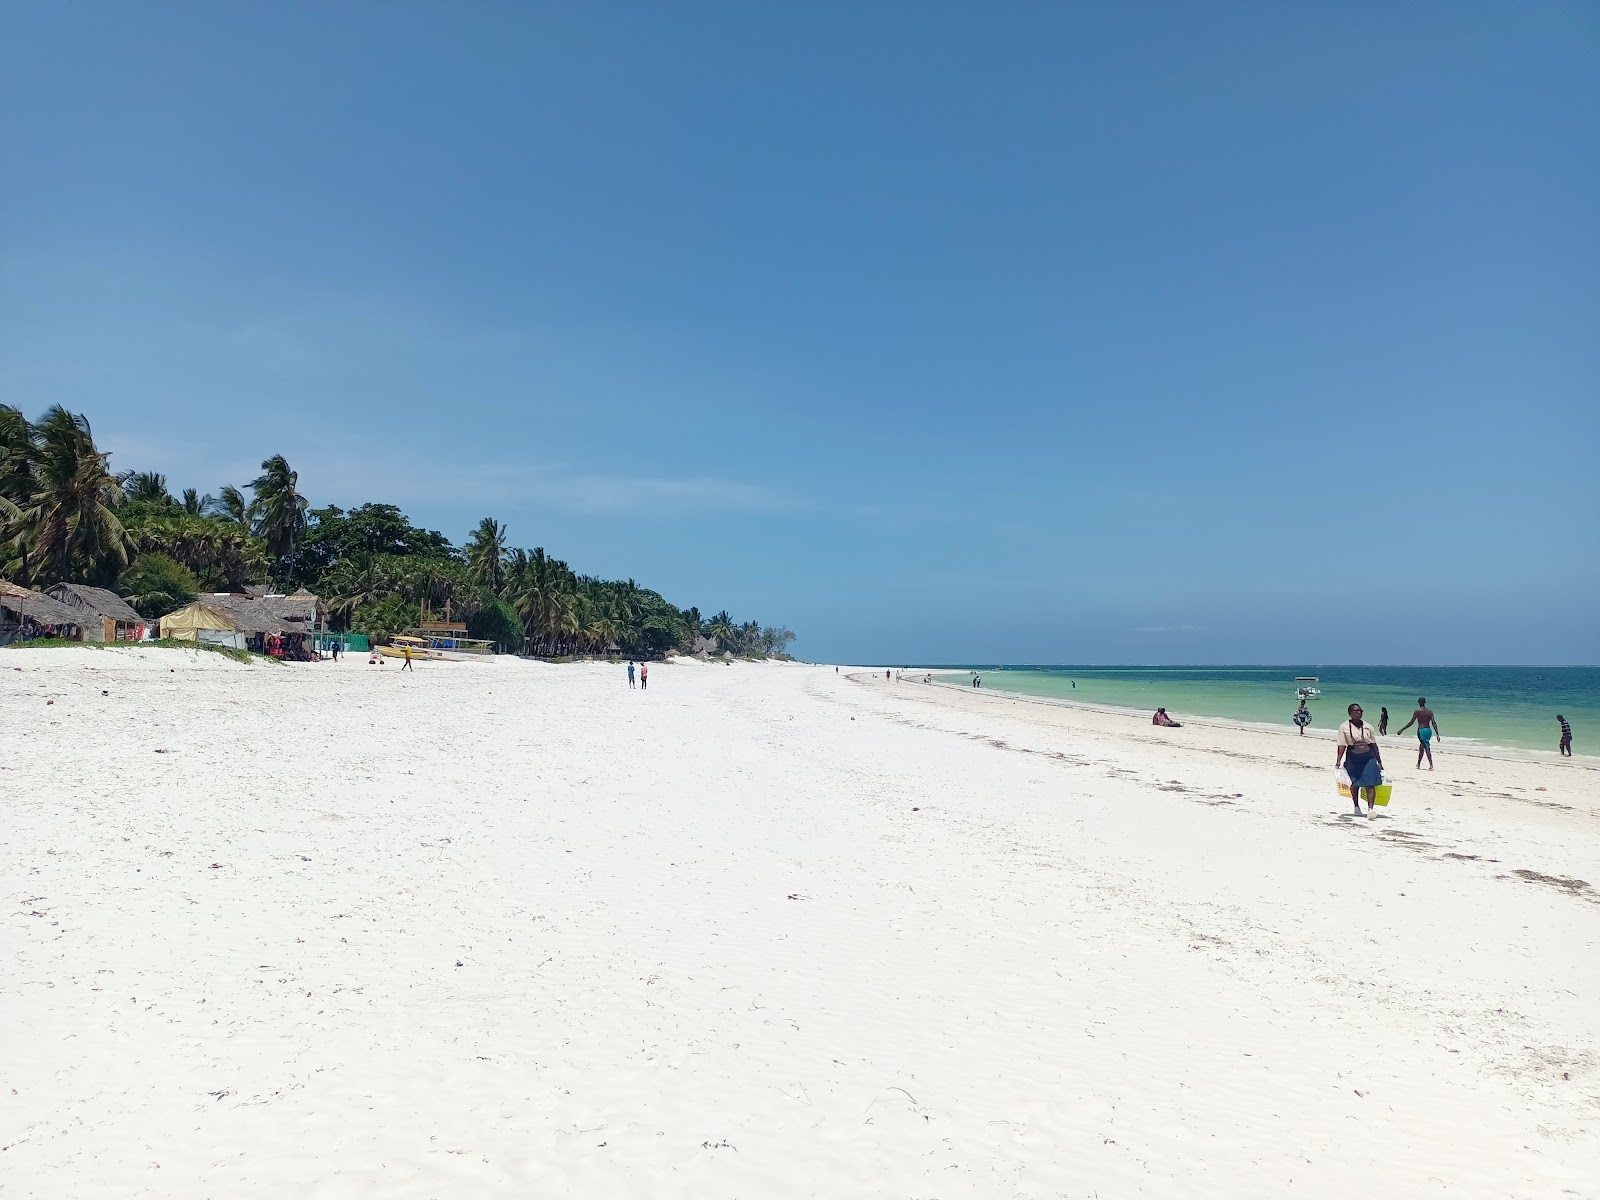 Foto av Nyali Strand (Mombasa) med lång rak strand